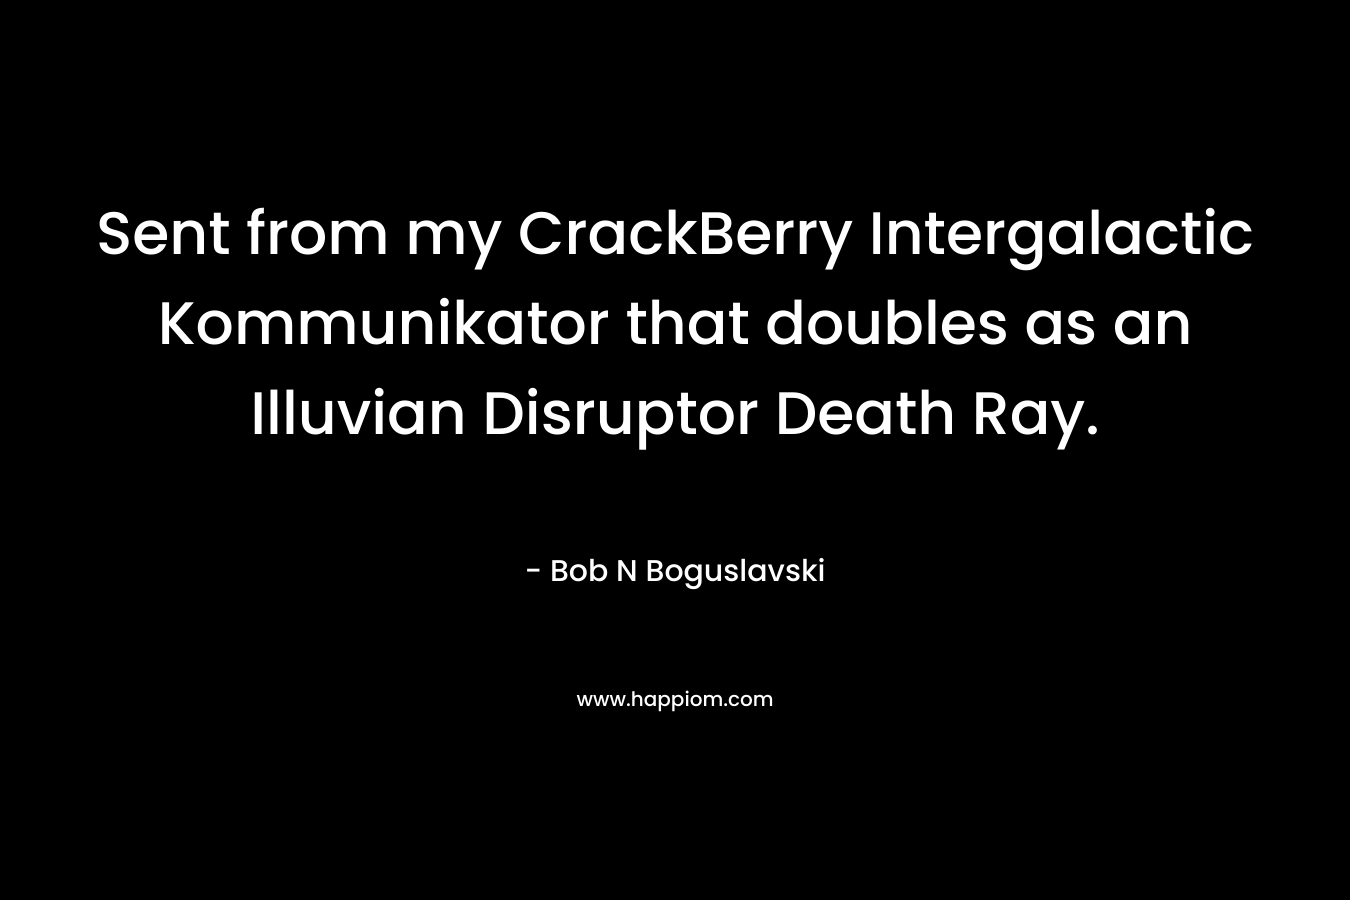 Sent from my CrackBerry Intergalactic Kommunikator that doubles as an Illuvian Disruptor Death Ray.